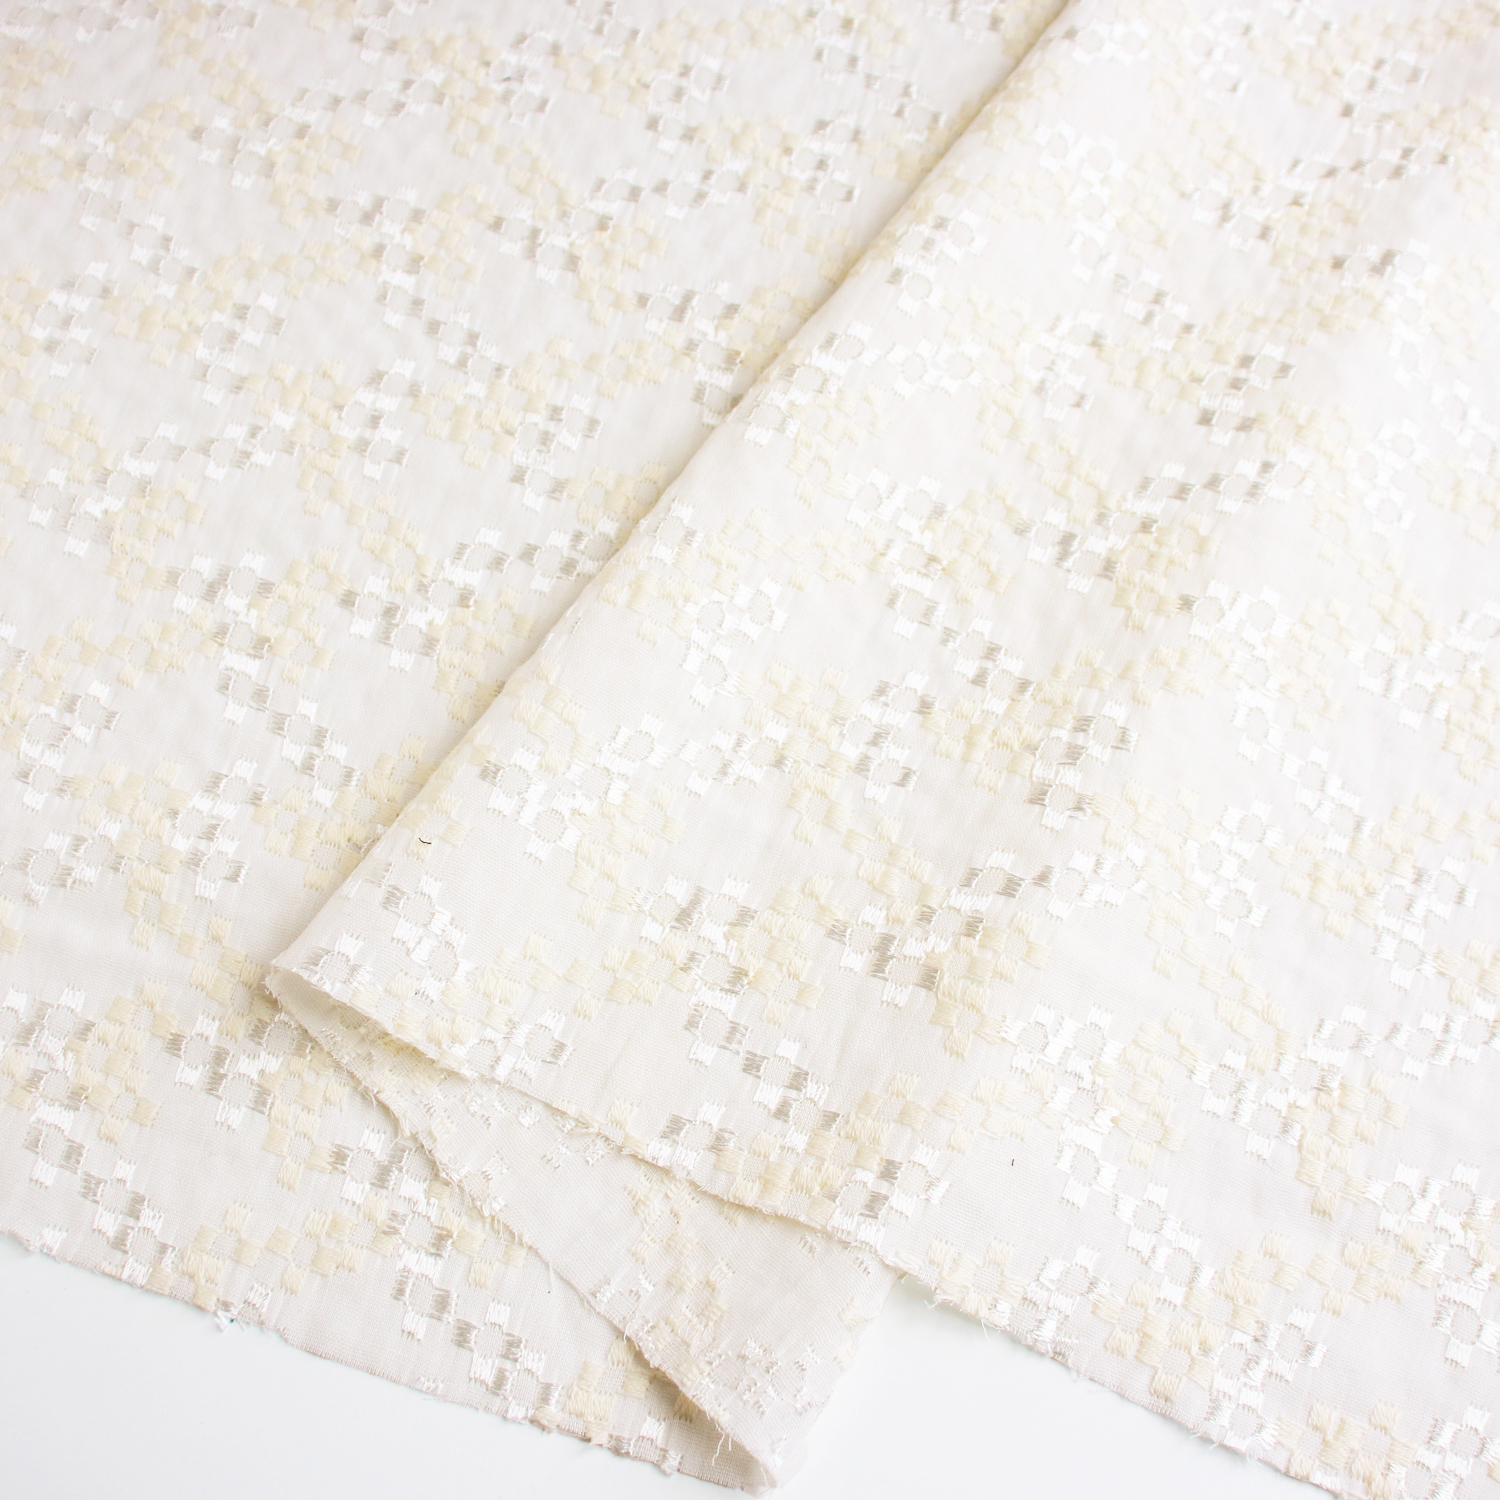 AL566R-5090 cotton lace fabric, Width 100cm, 〇m roll (roll)